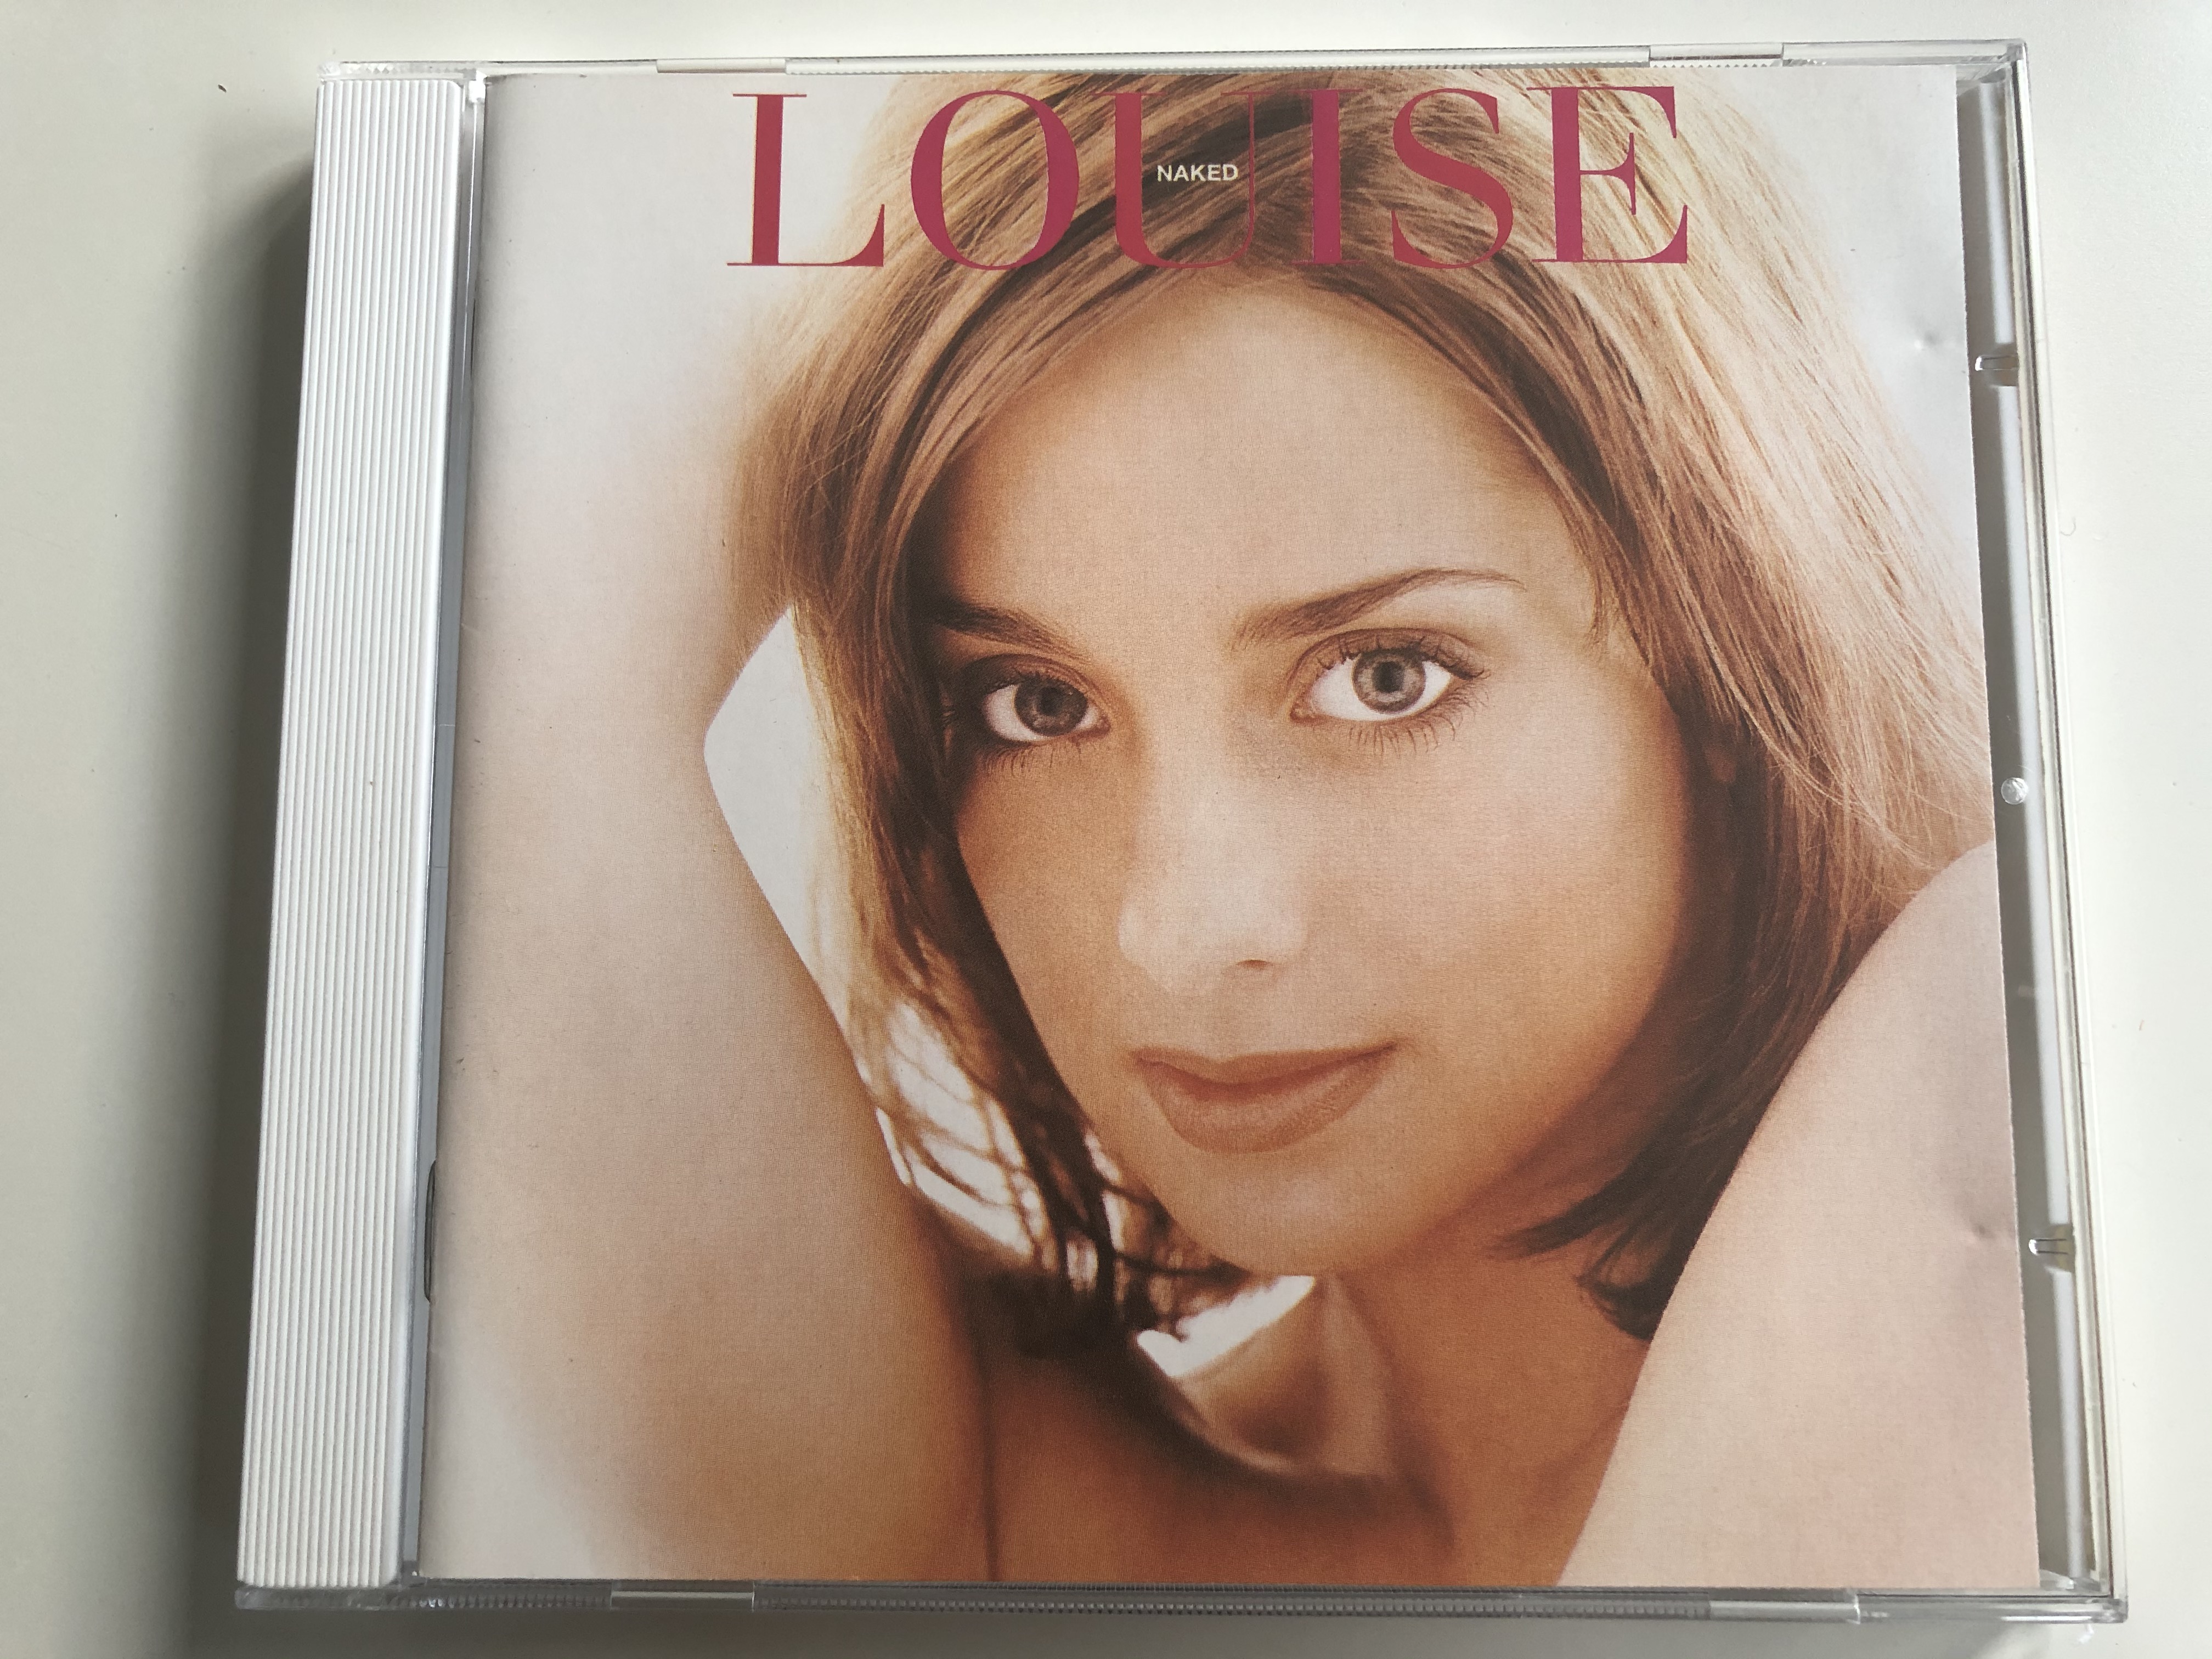 louise-naked-emi-united-kingdom-audio-cd-1996-724385217029-1-.jpg